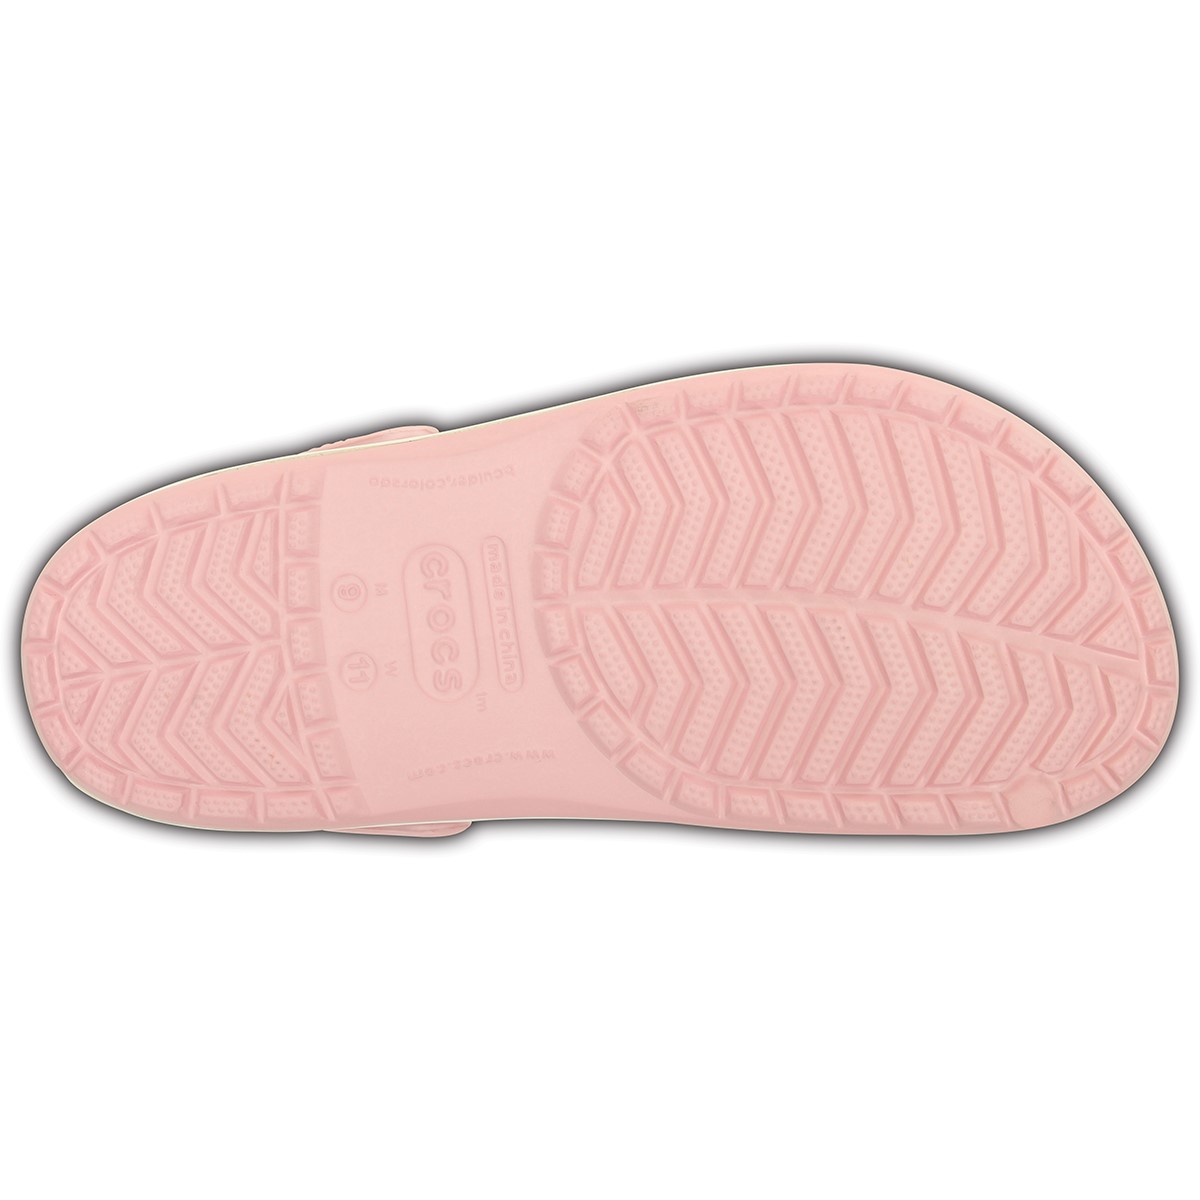 Crocs Unisex Sandalet 11016 Pearl Pink/Wild Orchid